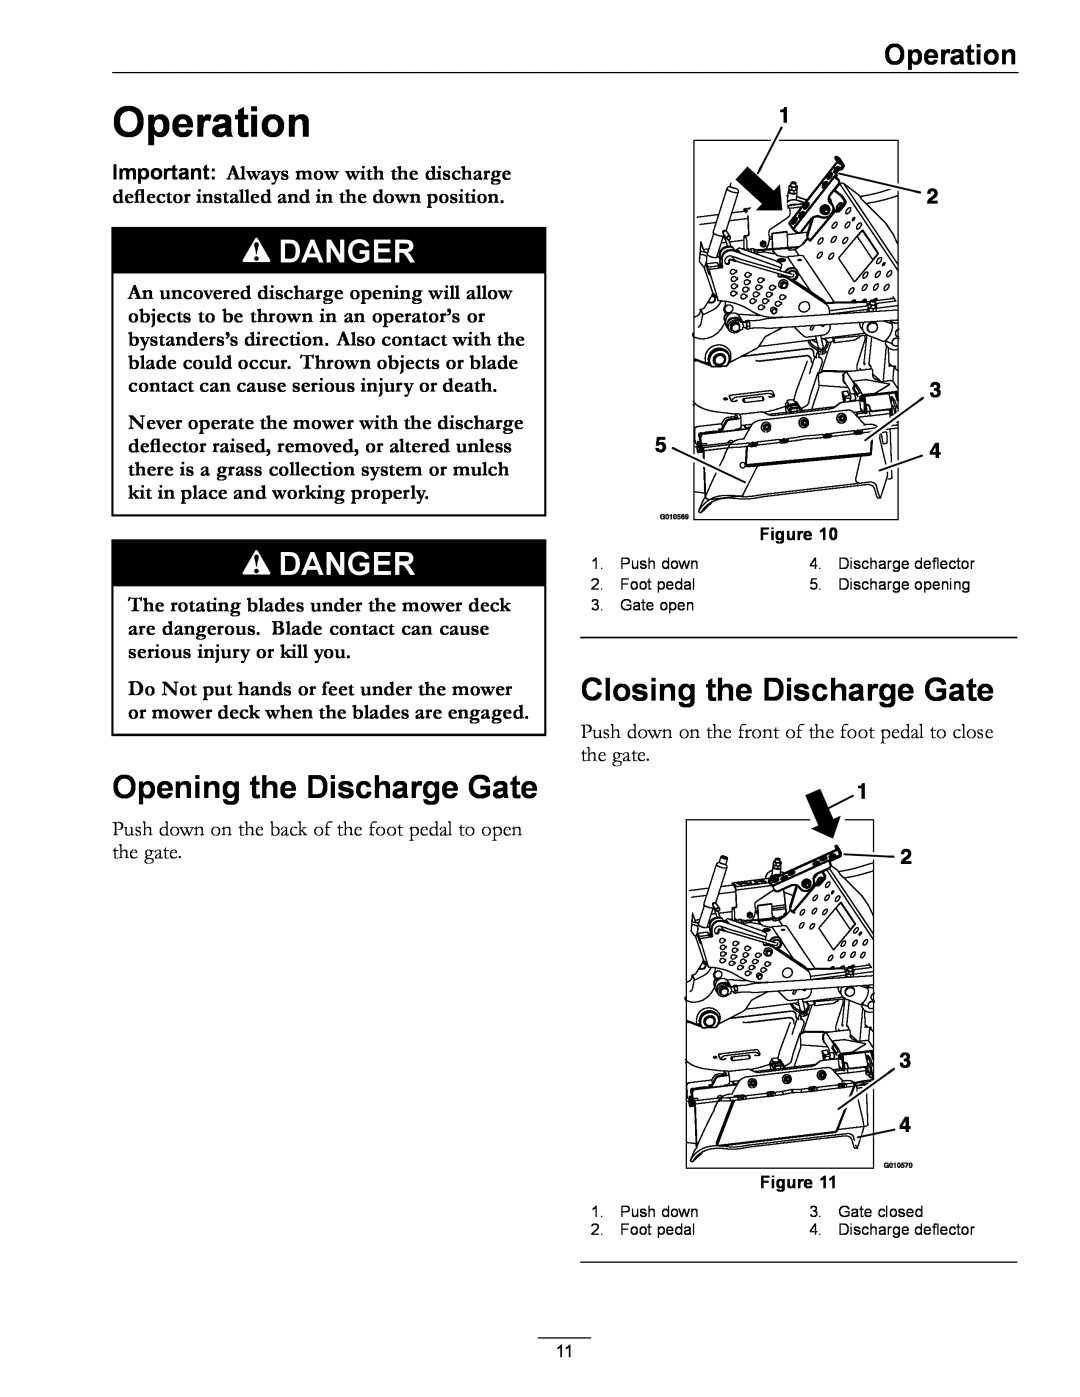 Exmark OCD02 manual Operation, Opening the Discharge Gate, Closing the Discharge Gate, Danger 